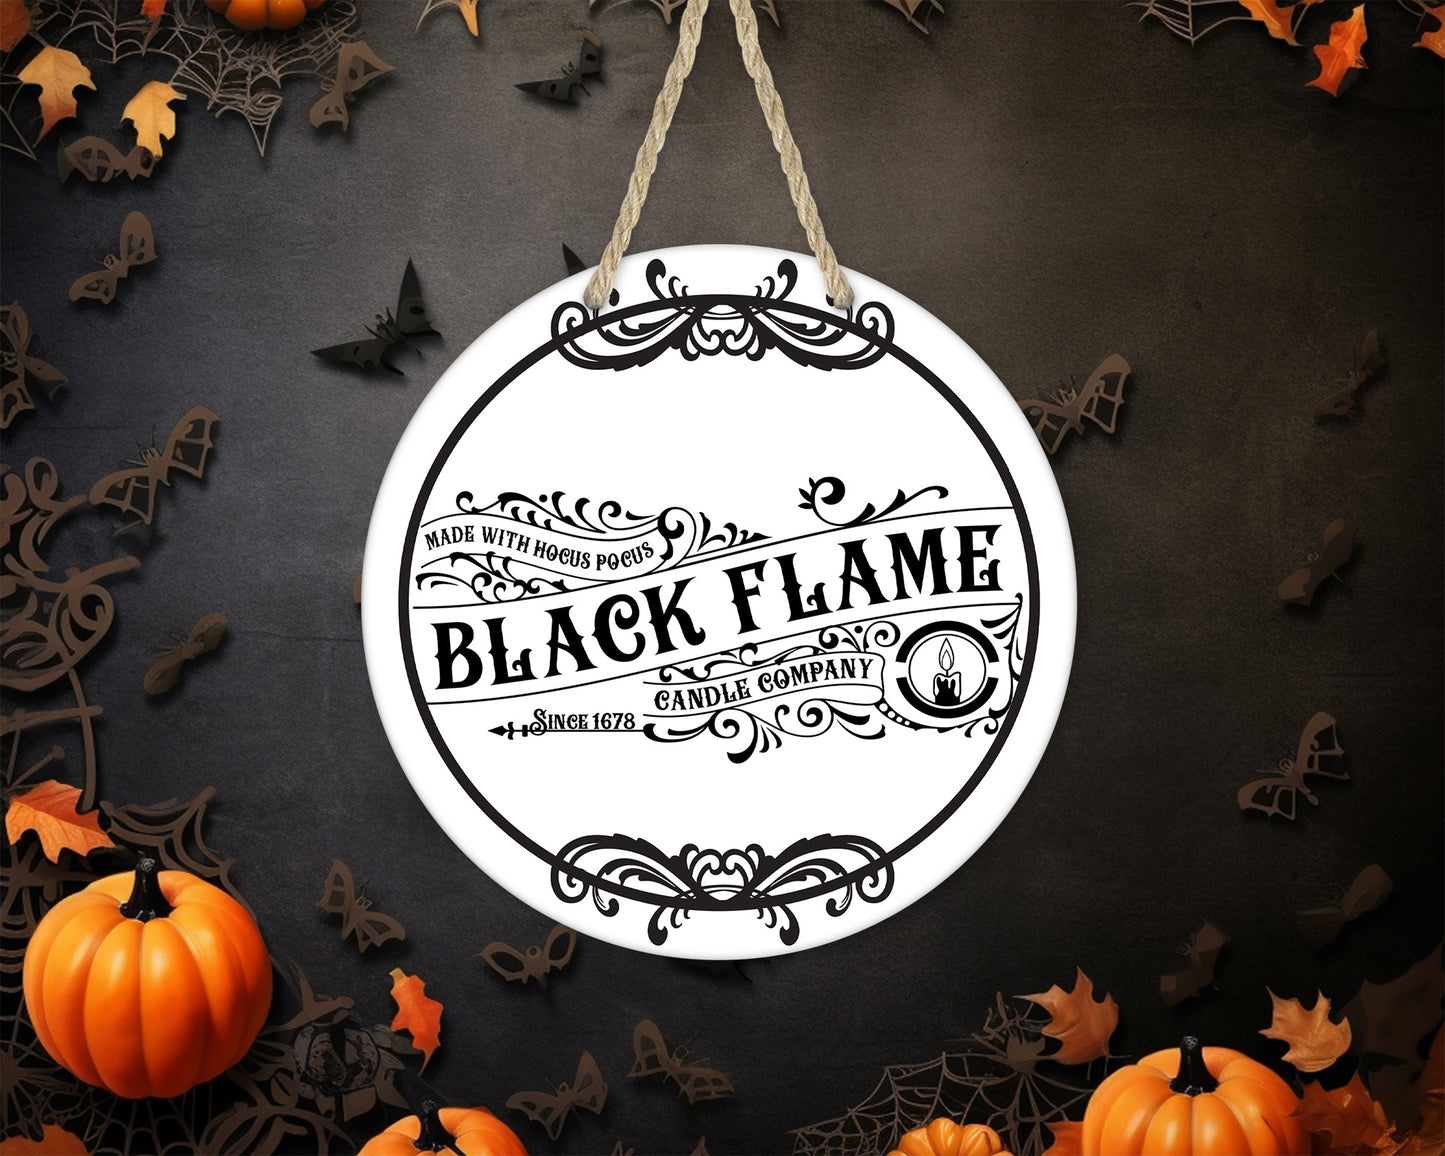 Black Flame Candle Company - 10" Round Door Hanger